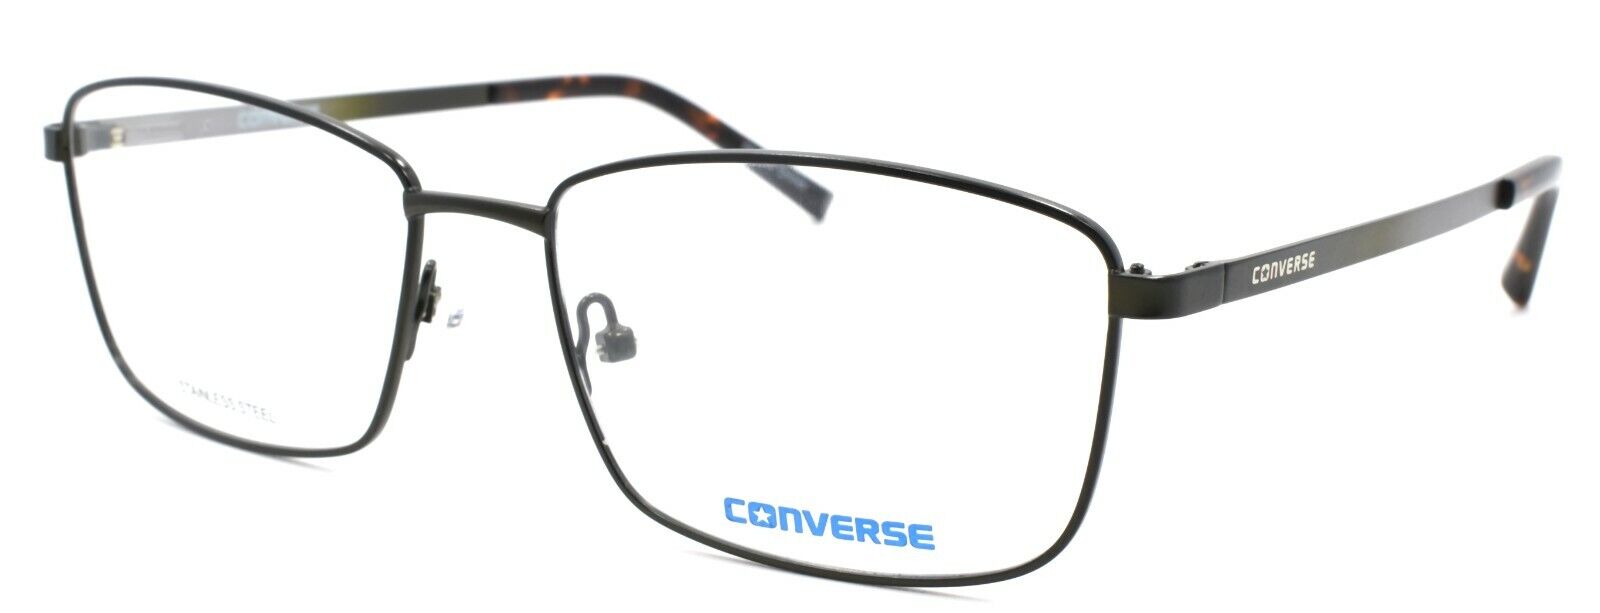 CONVERSE G201 Men's Eyeglasses Frames 56-17-140 Black + CASE